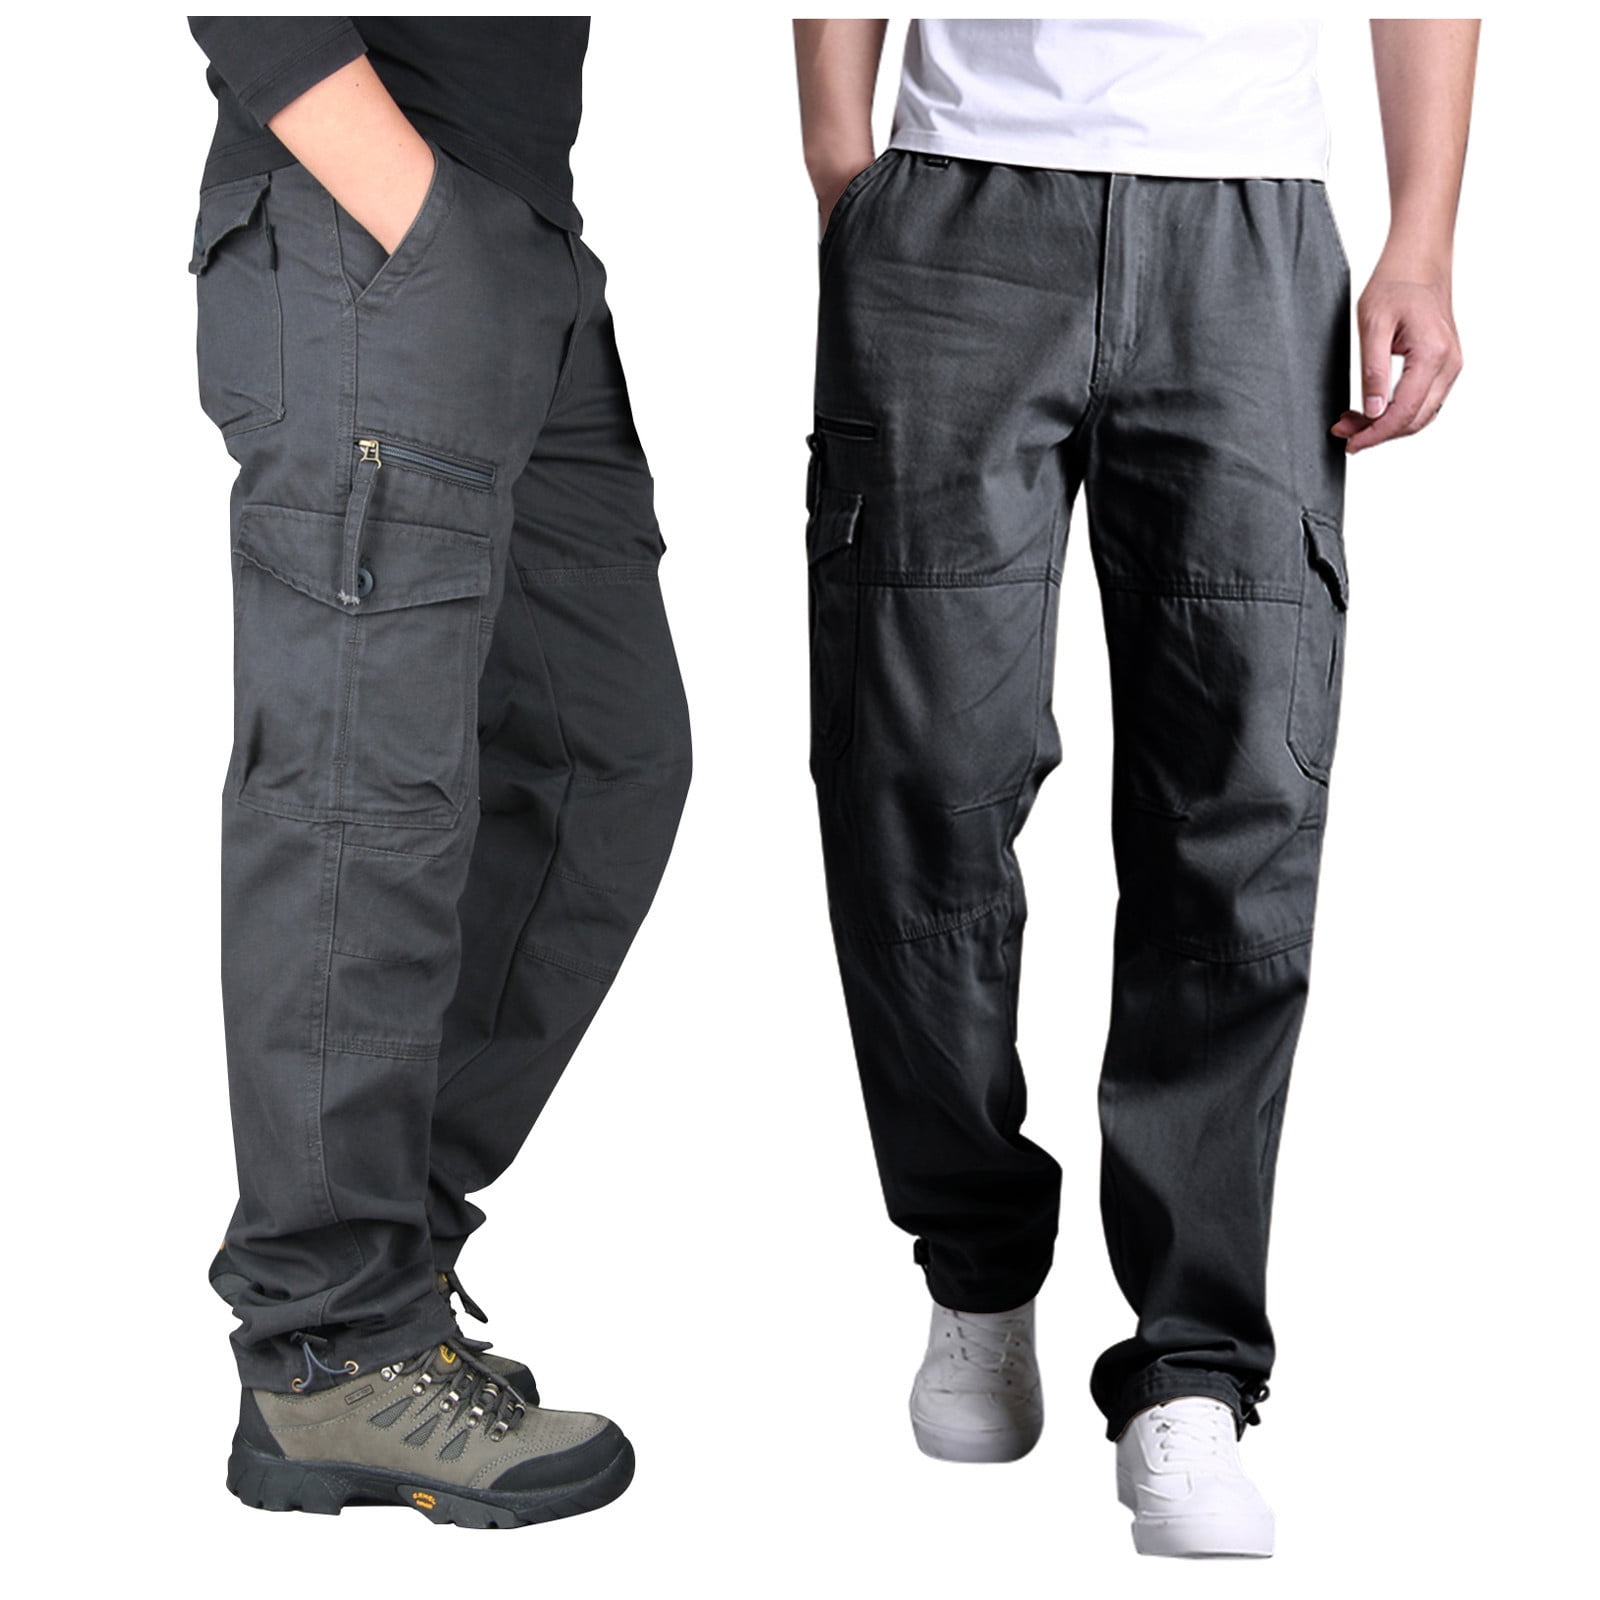 Jyeity Hot Fall Cool Price Men's Cotton Multi-pocket Elastic Waist  Wear-resistant Overalls Full Length Pants Work Pants For Men  Gray Size 10 